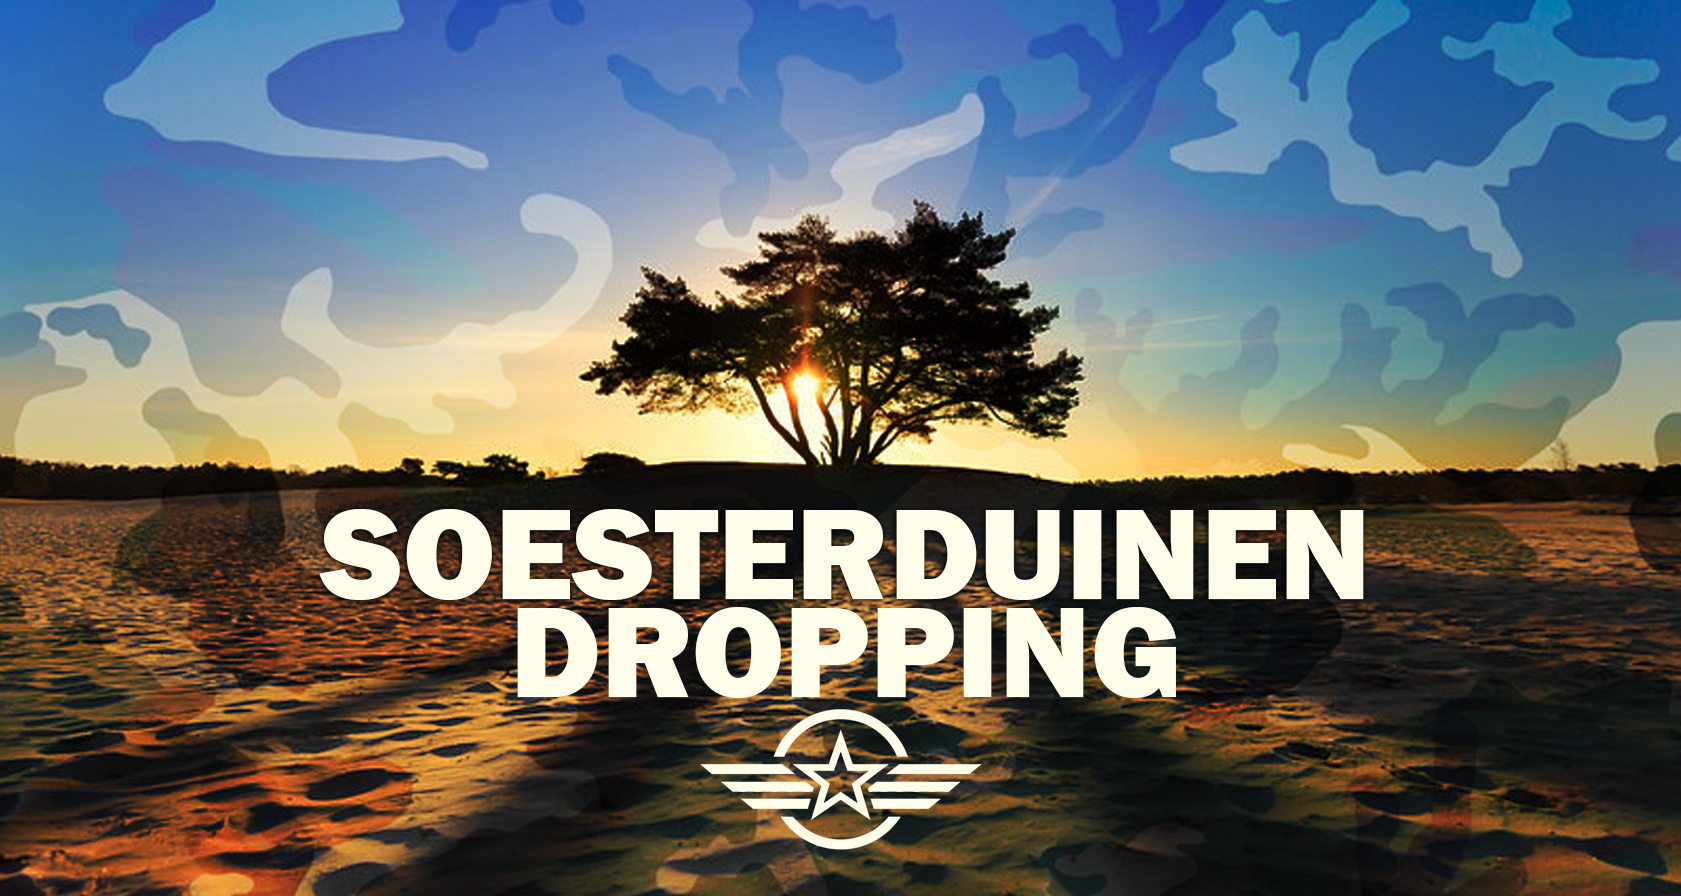 Bedrijfsuitje Dordrecht: Soester Duinen Dropping